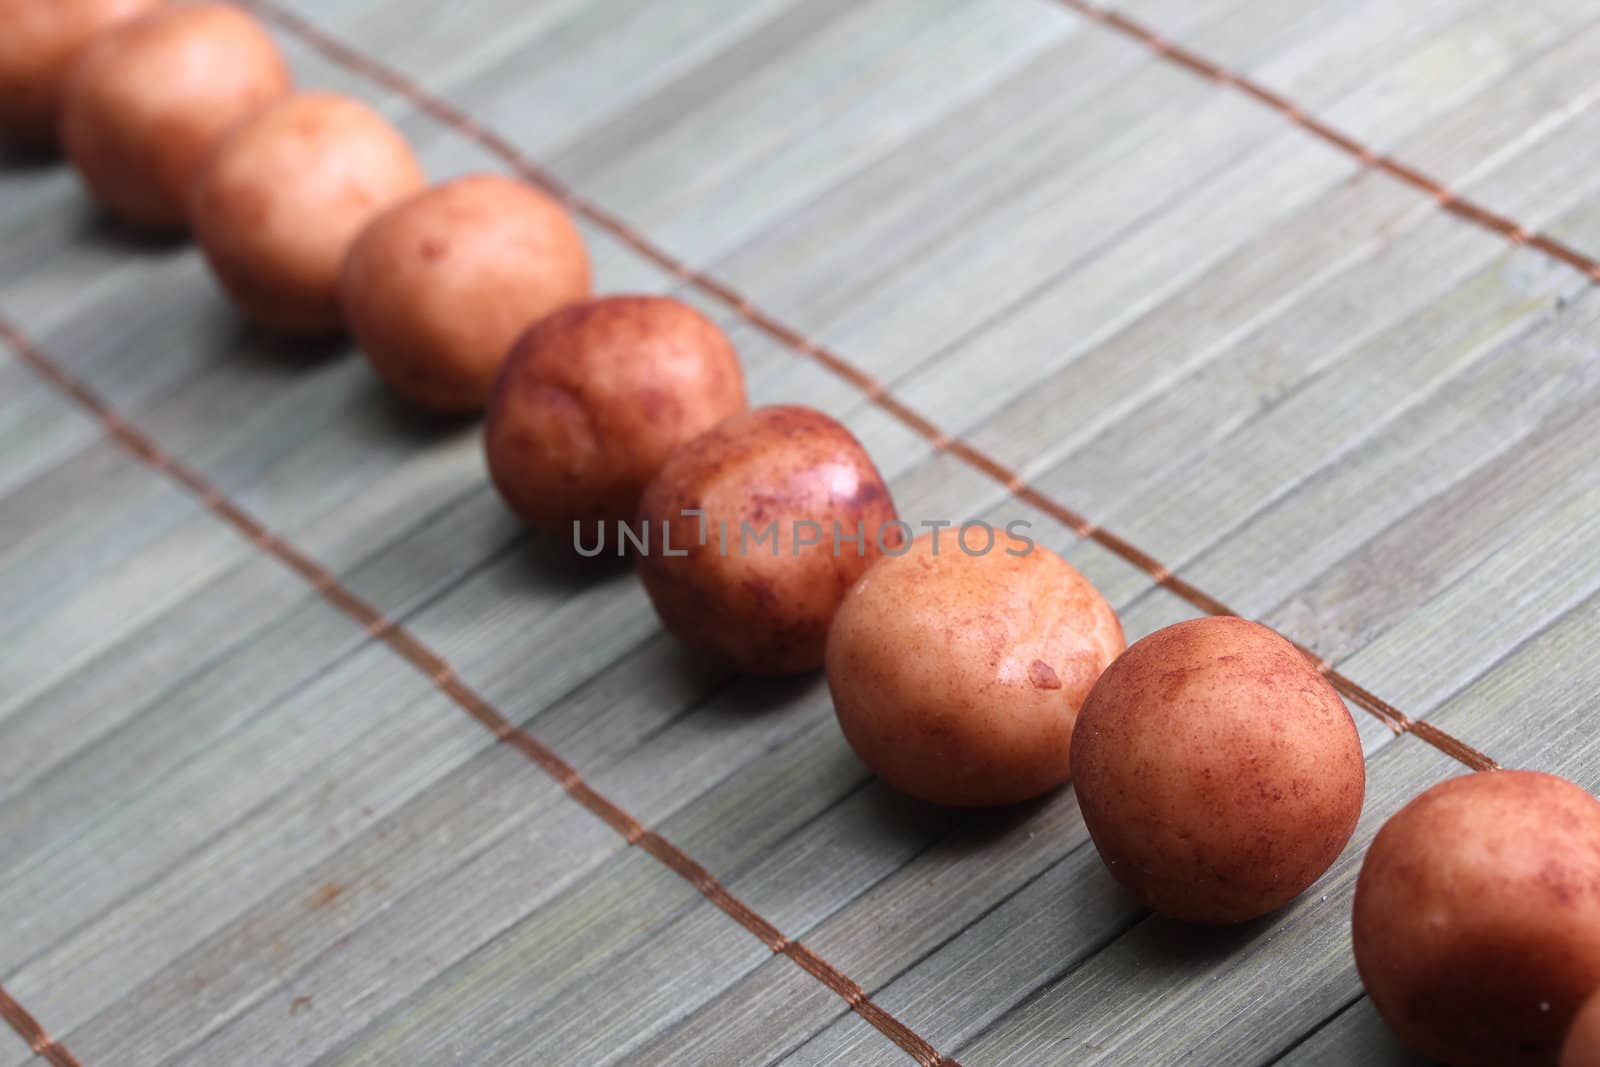 marzipan potatoes row by Teka77